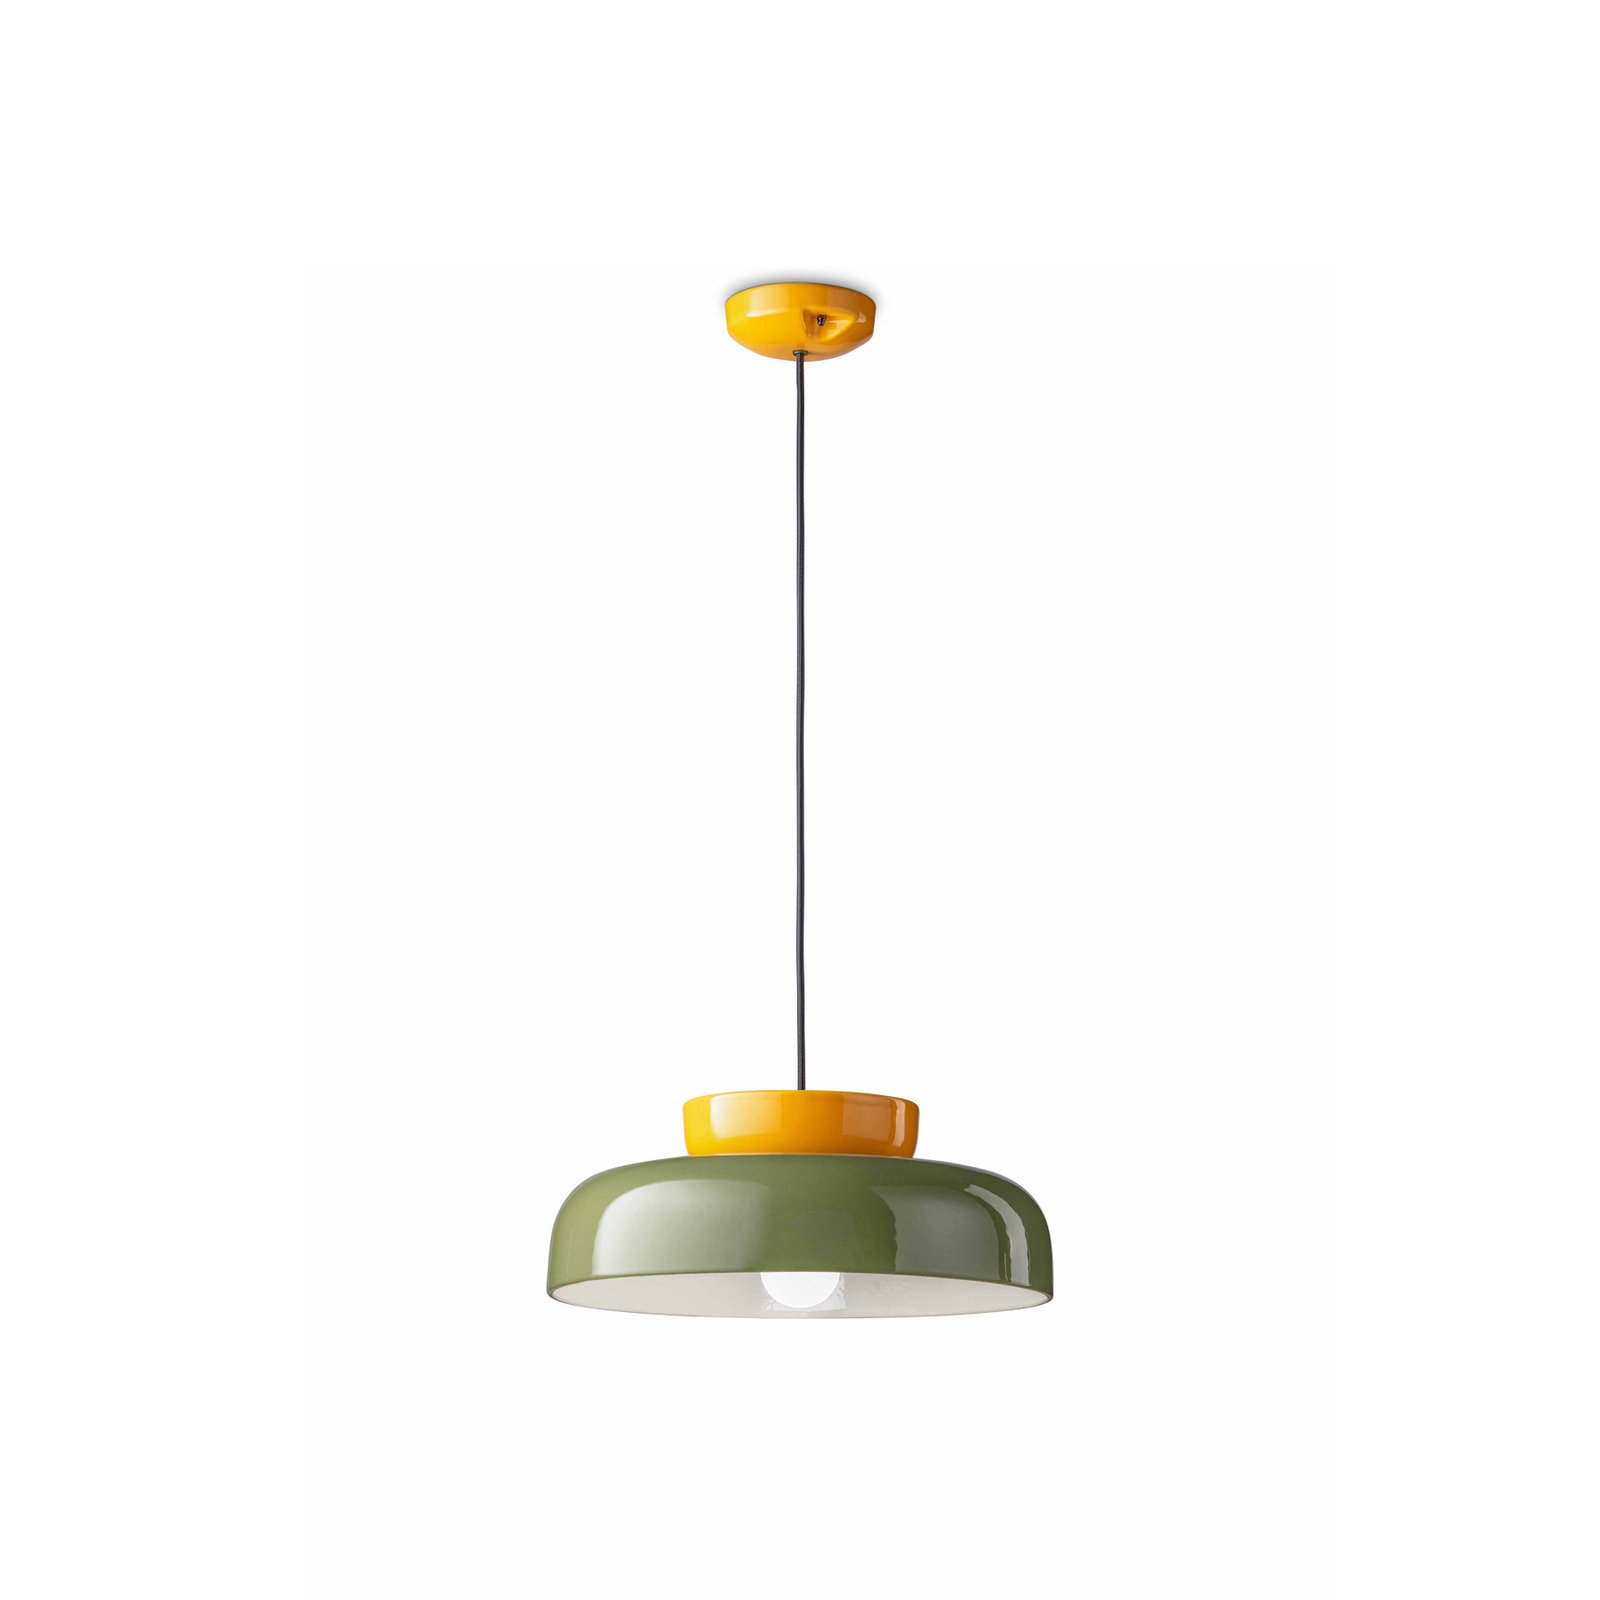 Maracanà hanglamp, geel/sage groen